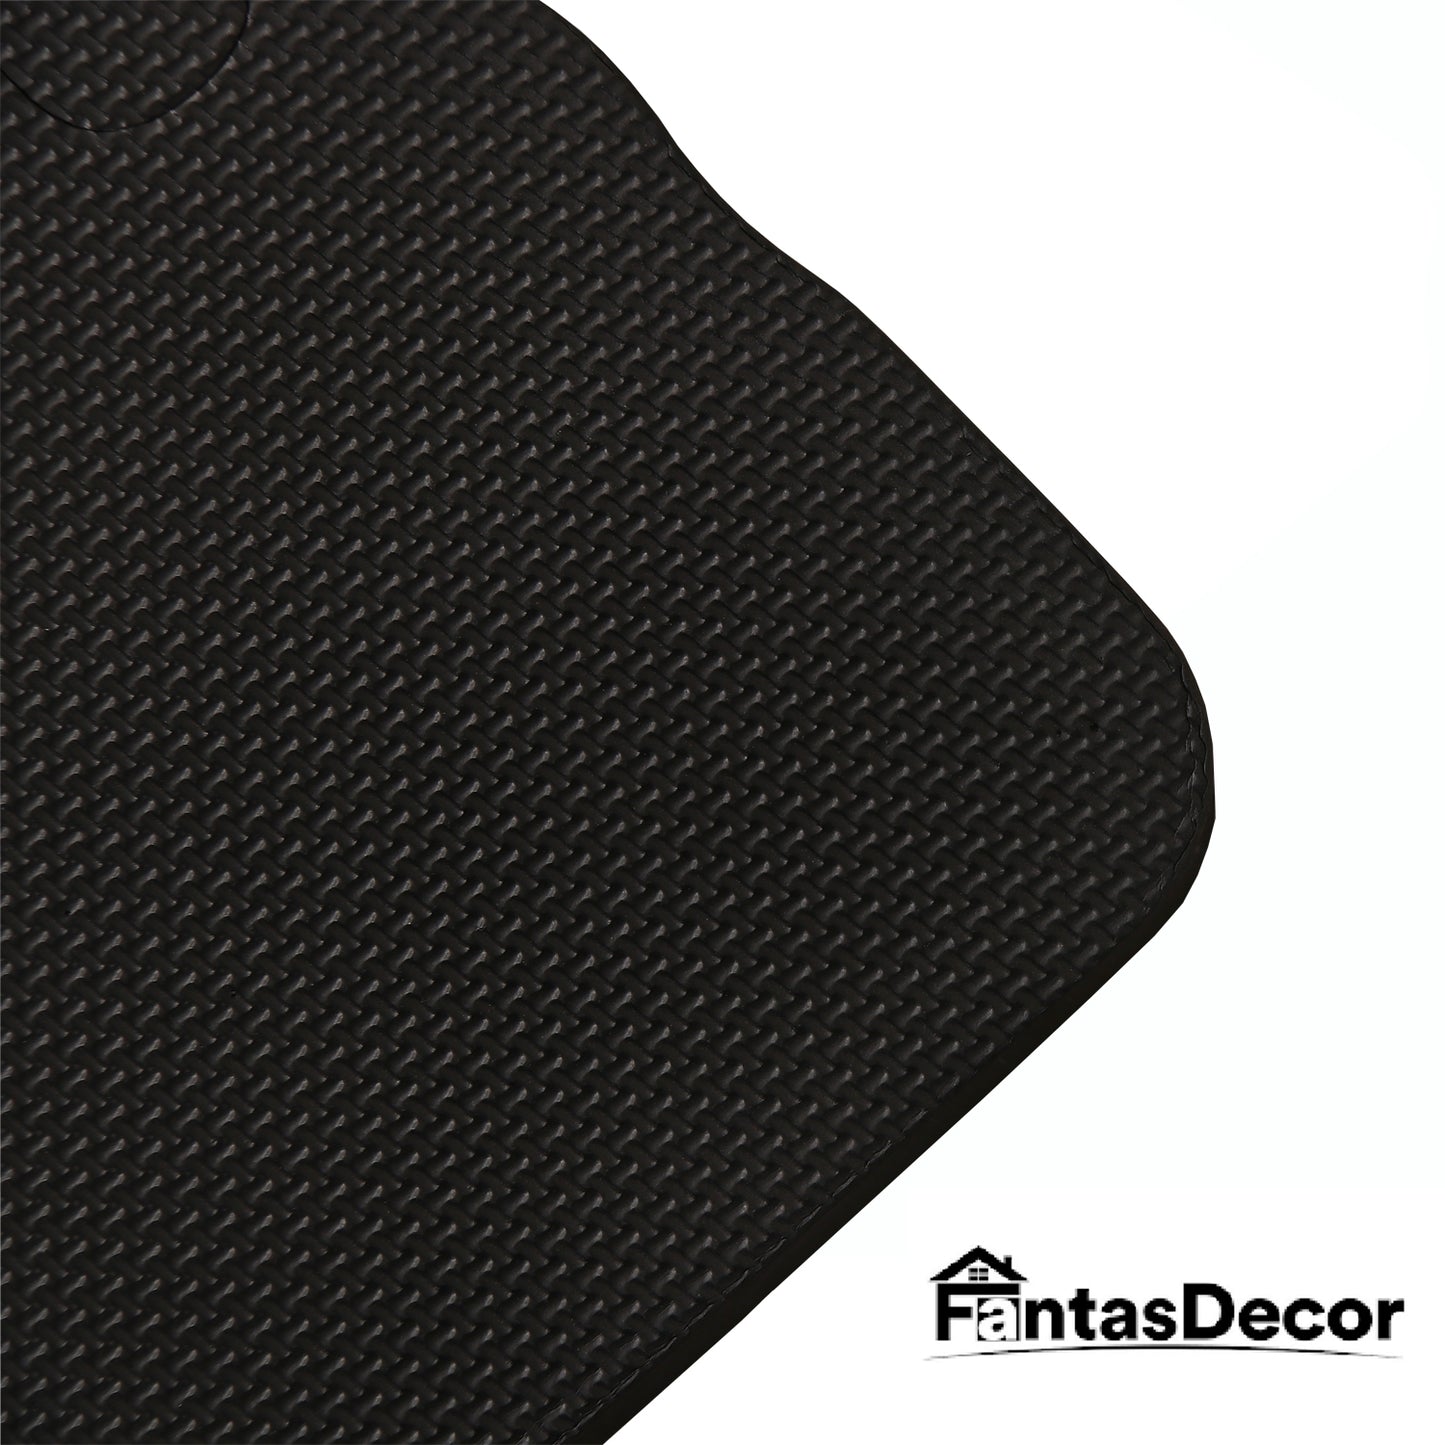 Fantasdecor Exercise Equipment Mat - Treadmill Mat, Fitness Mat, Elliptical Mat, Jump Rope Mat, Yoga Mat, Gym Mat Use on Hardwood Floors Protection